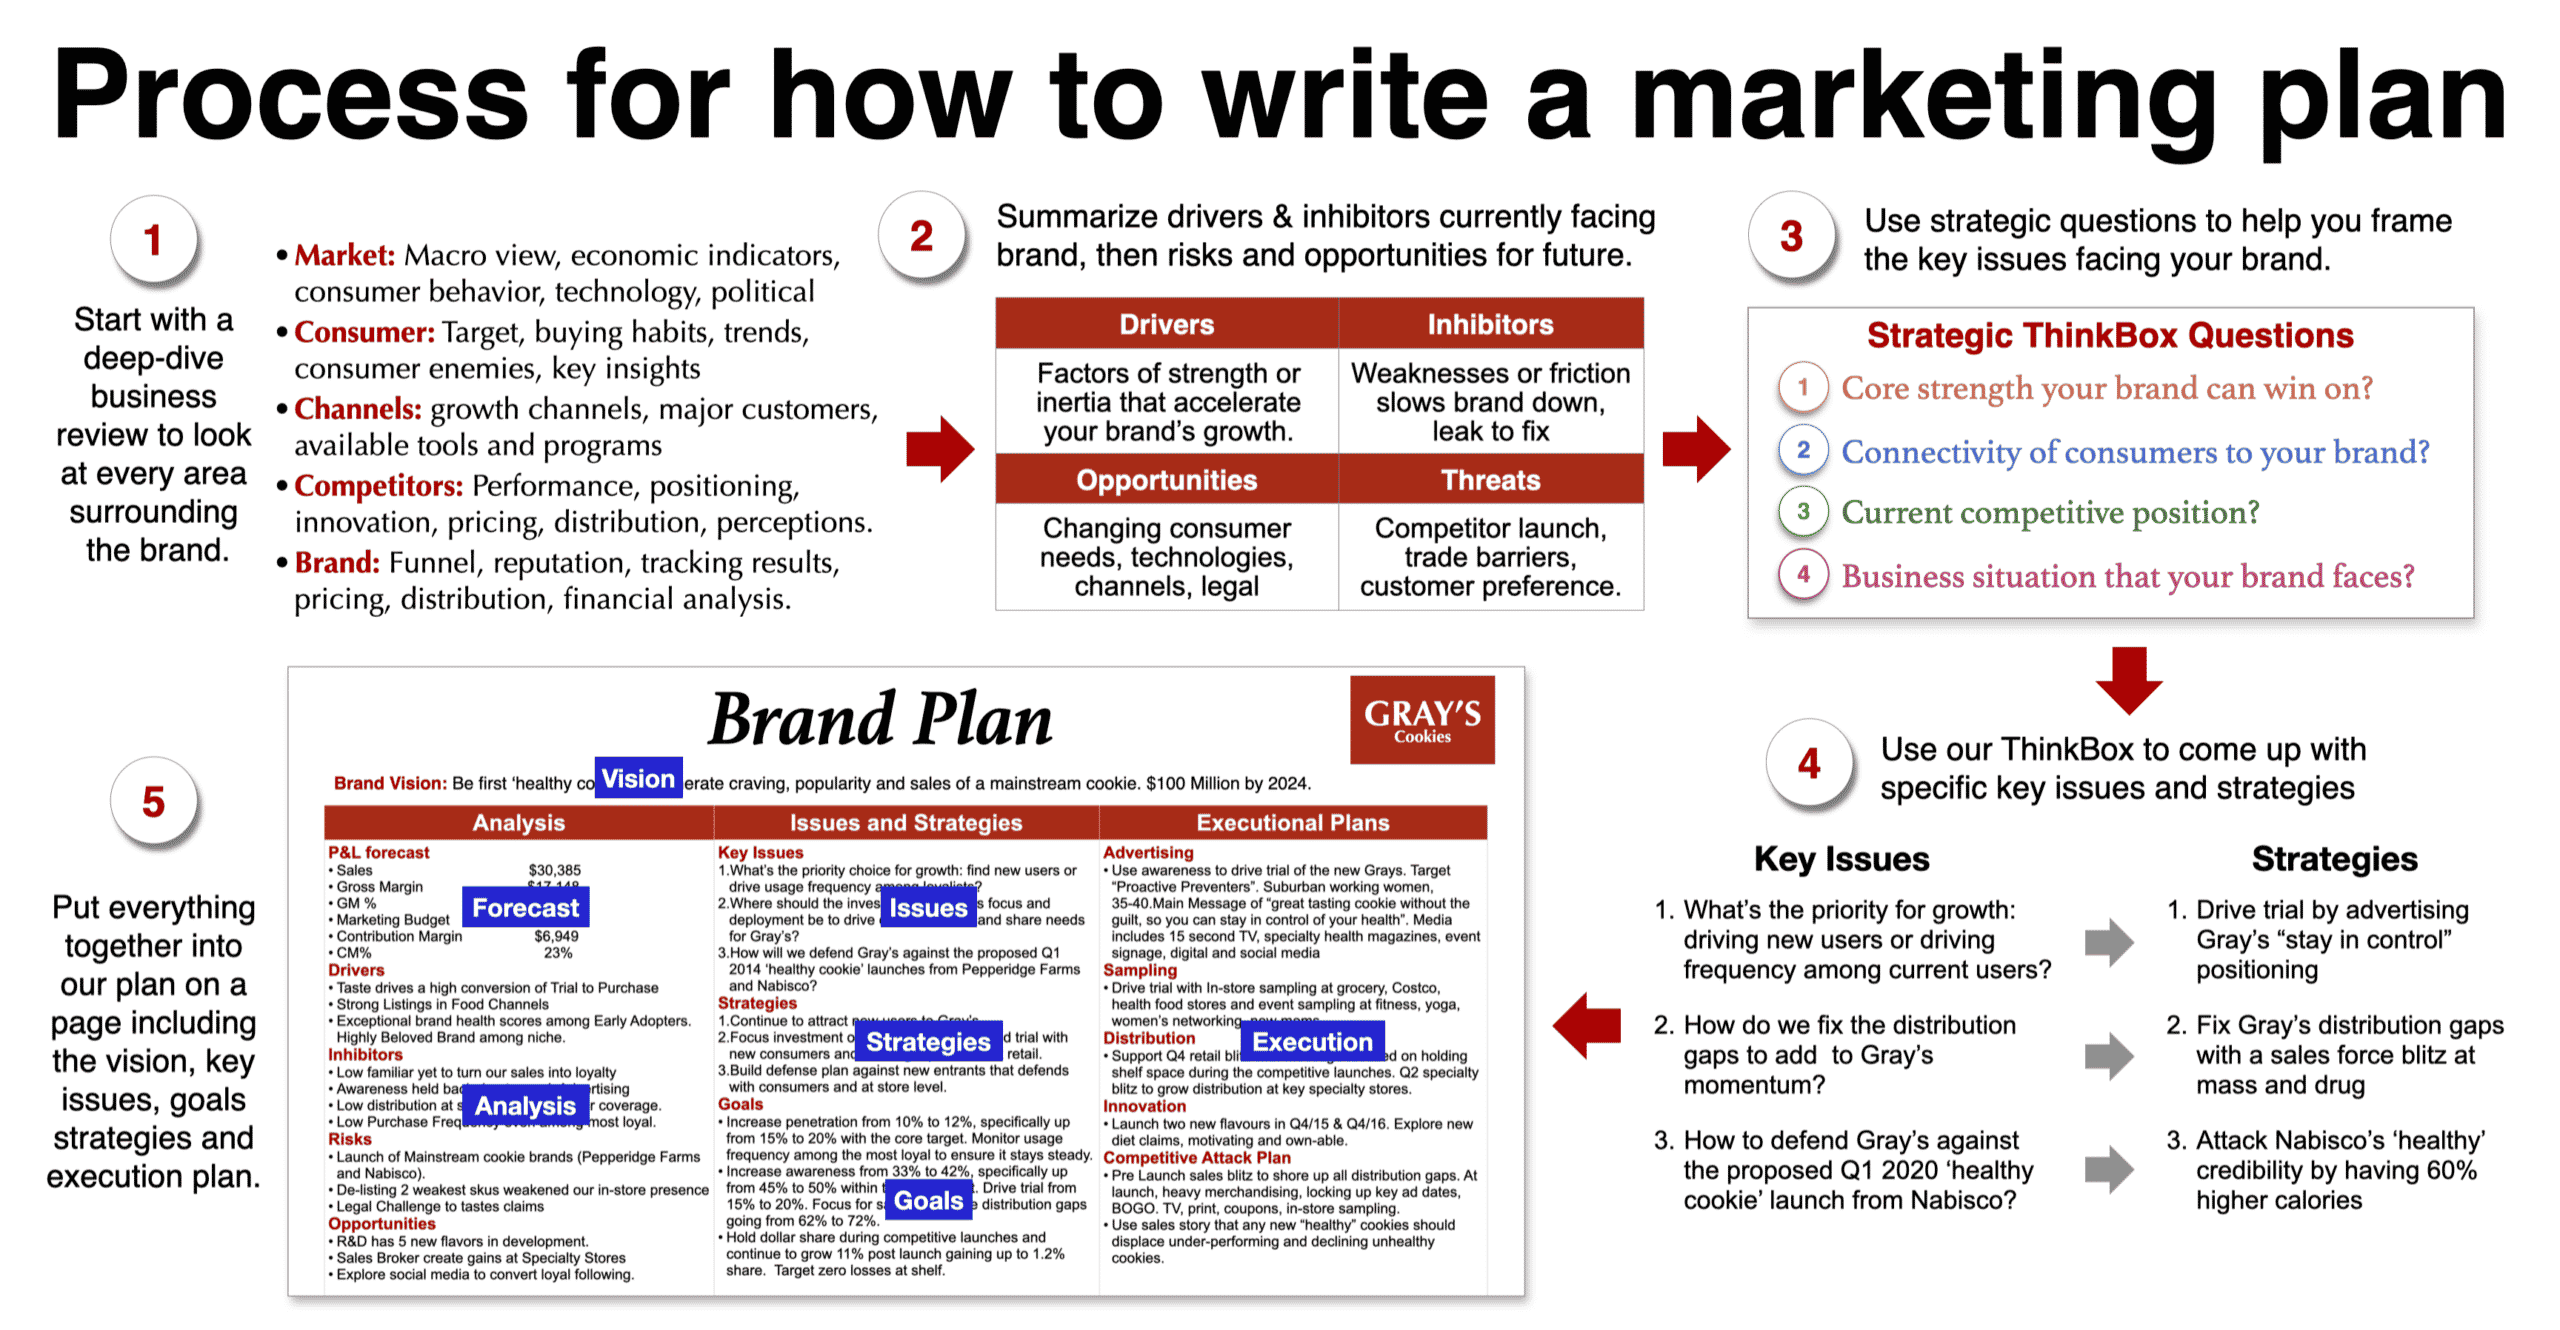 Marketing Plan process